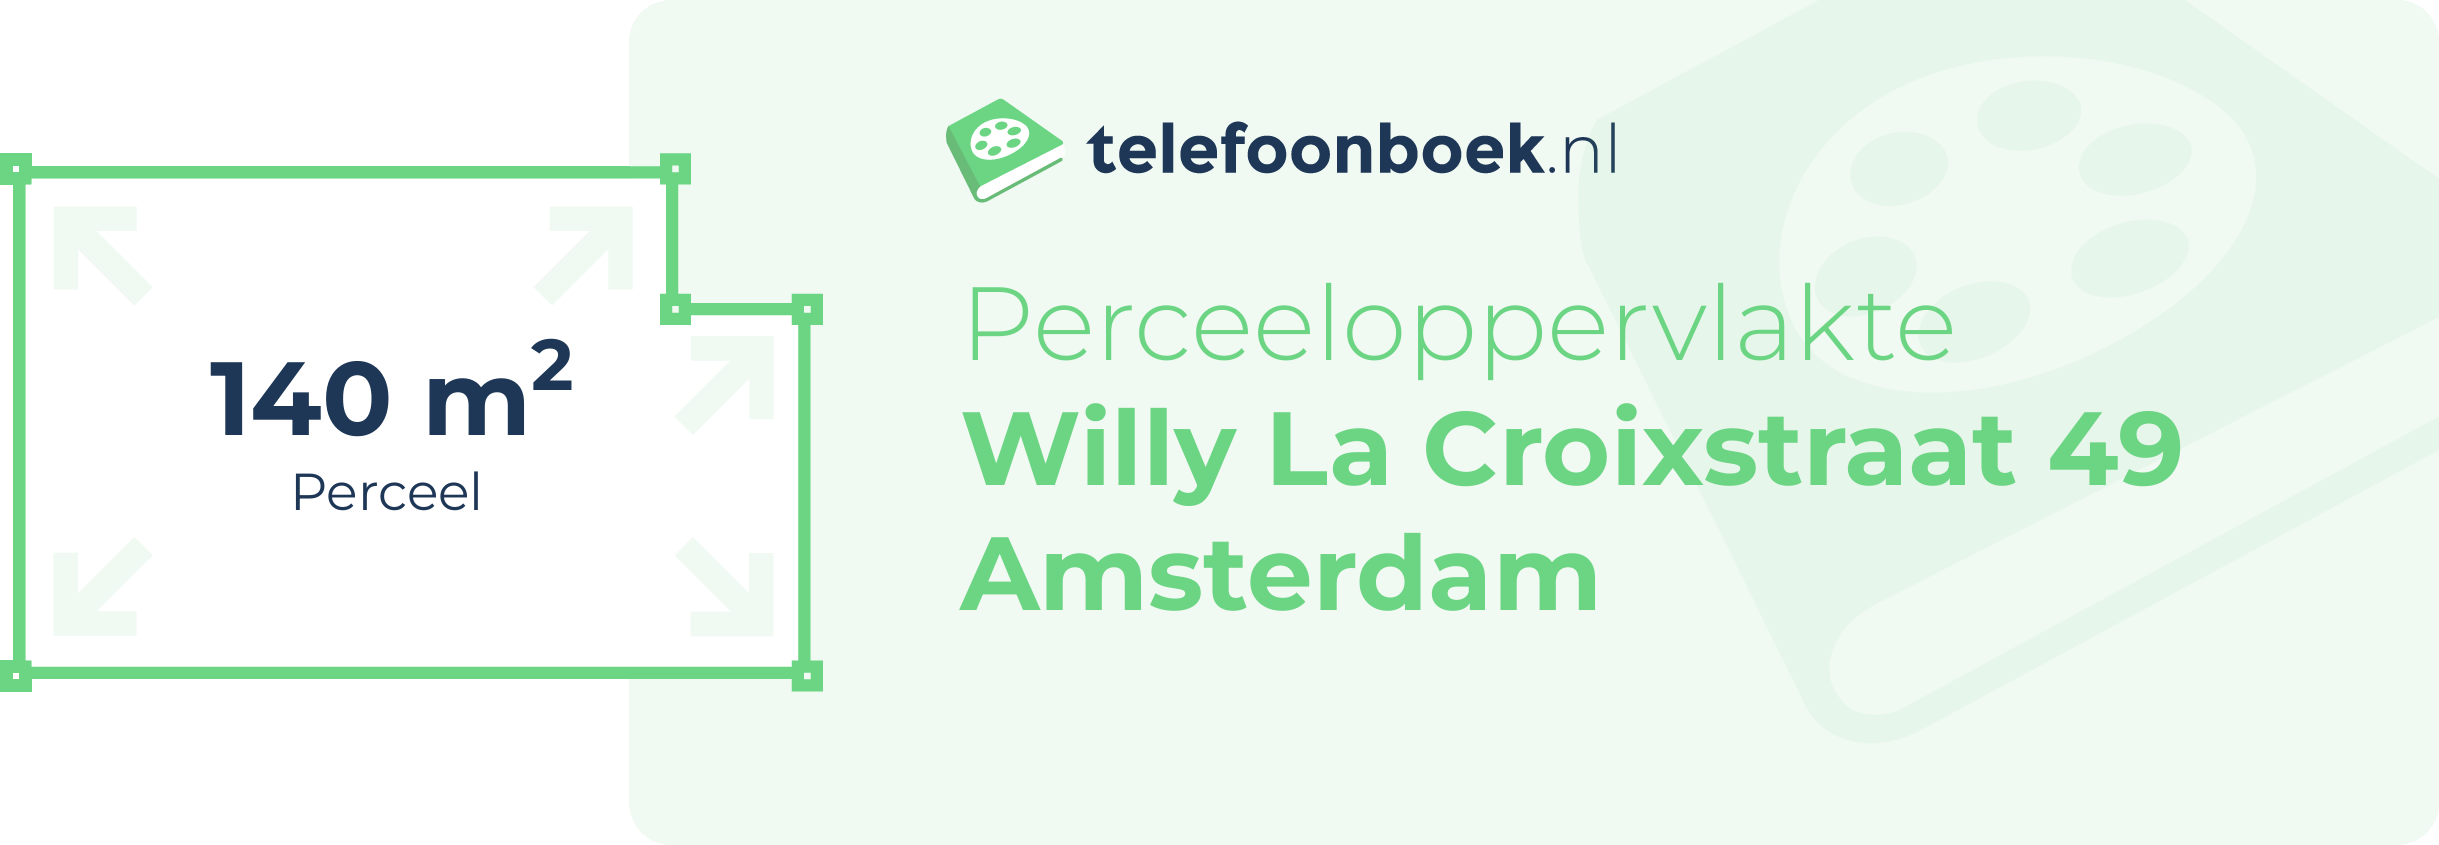 Perceeloppervlakte Willy La Croixstraat 49 Amsterdam